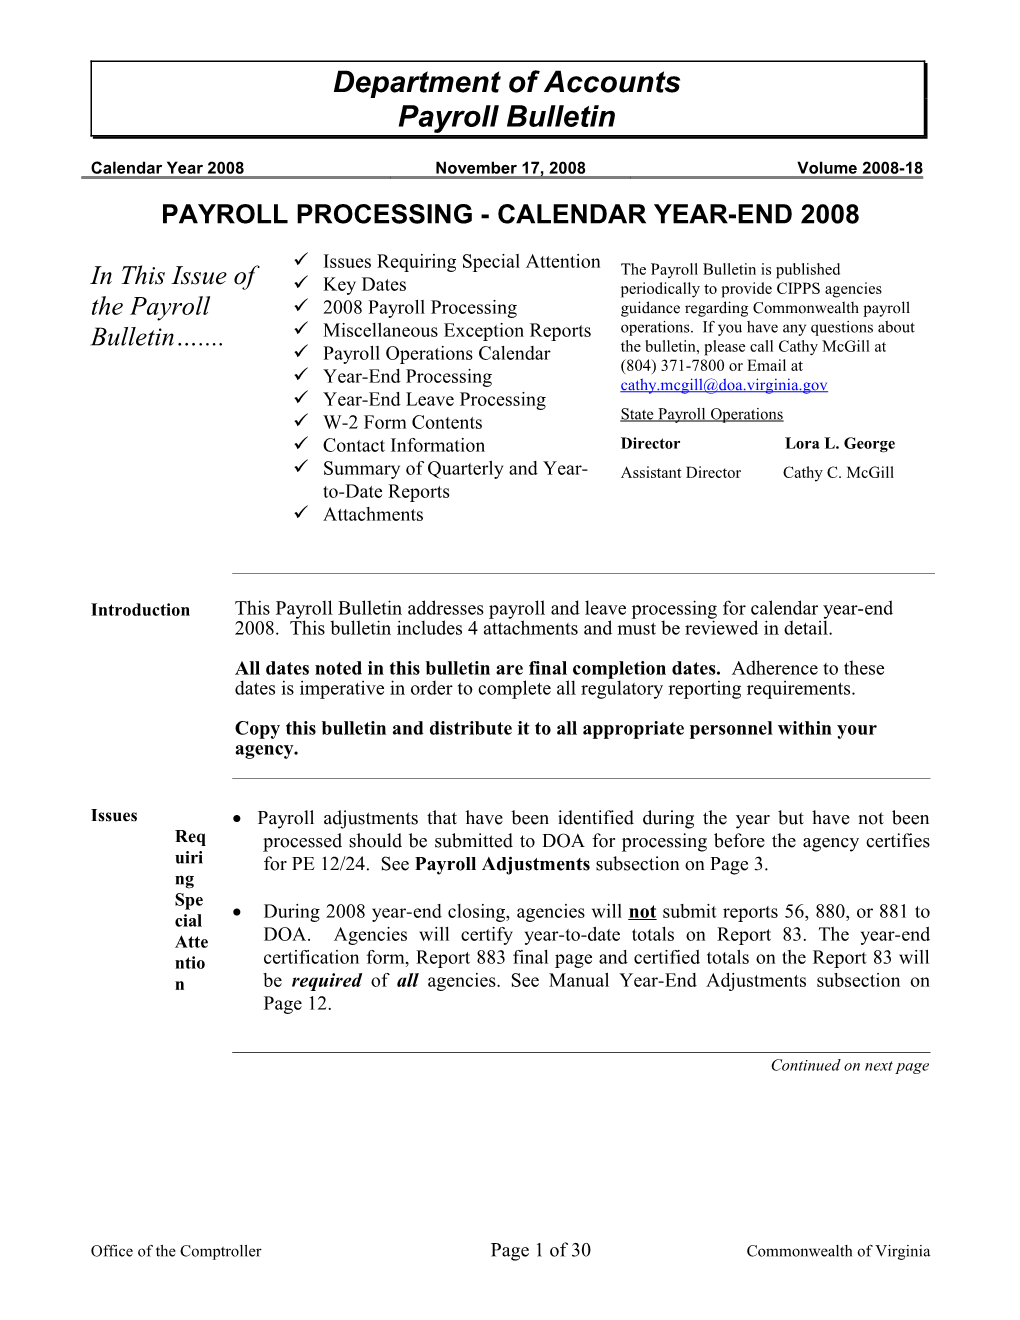 Payroll Bulletin - Calendar Year-End 2008 s1